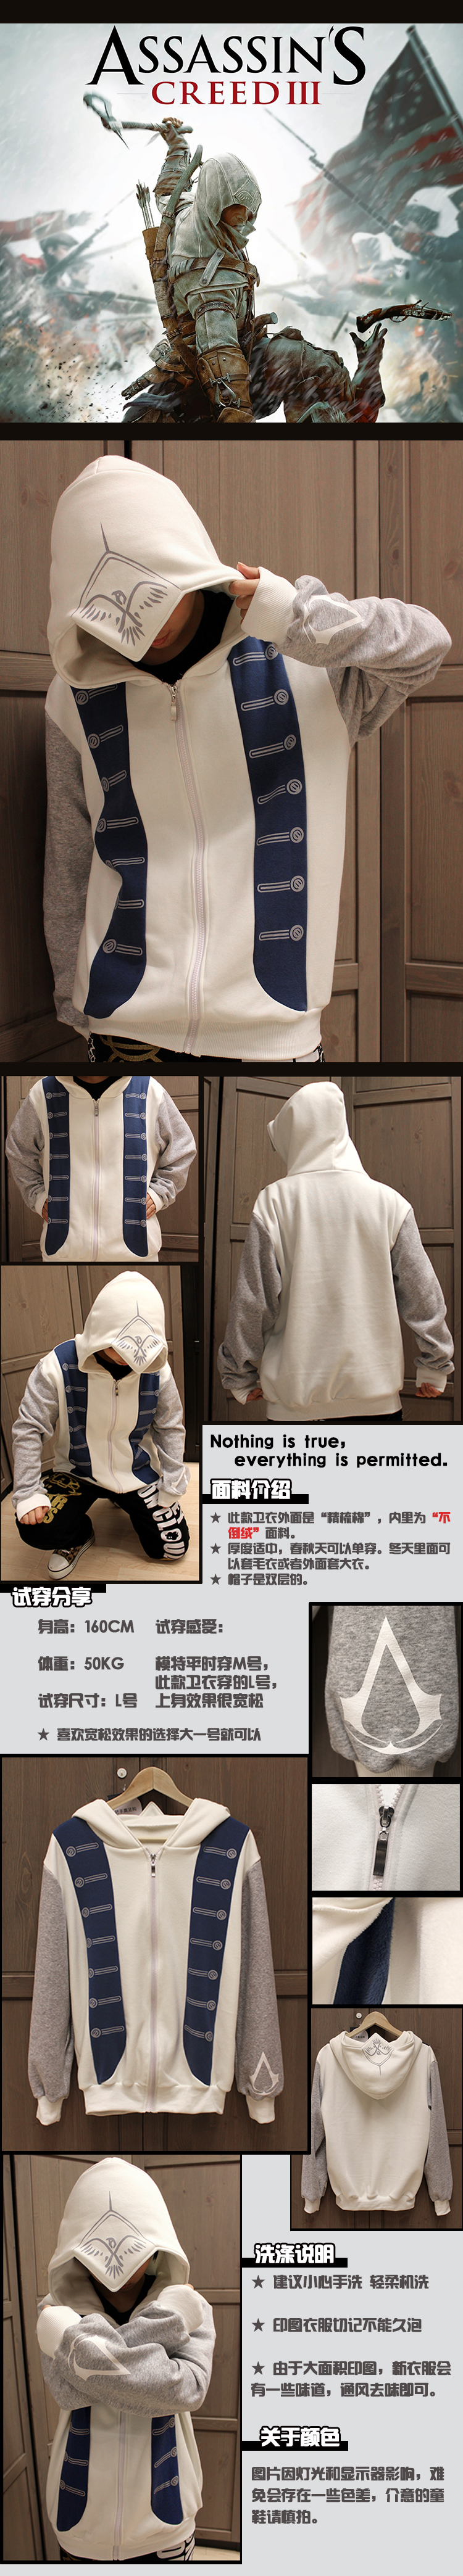 assassins-creed-III-3-hoodie-autume-costume-men-jacket-hoodies-fantasia-infantil-cosplay-winter-swea-2036229956